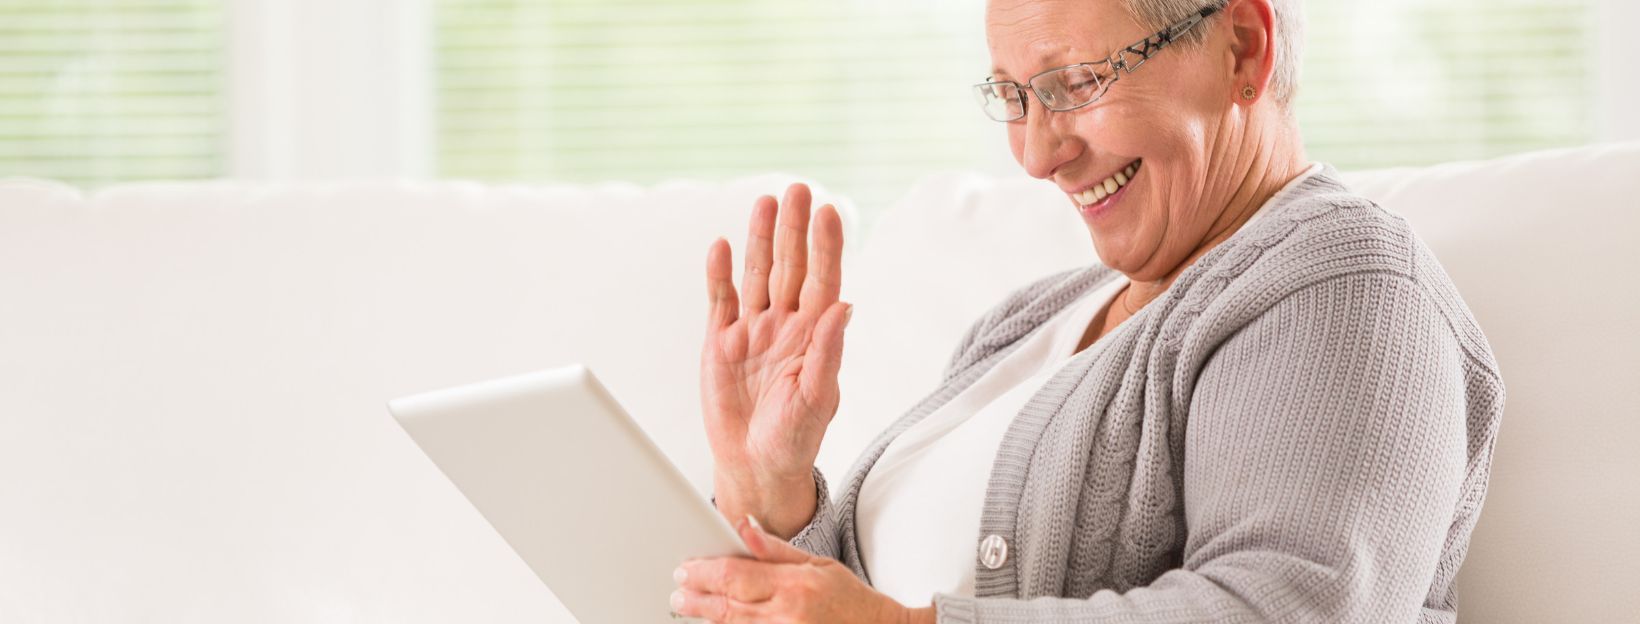 Using Technology to Reduce Senior Feelings of Isolation